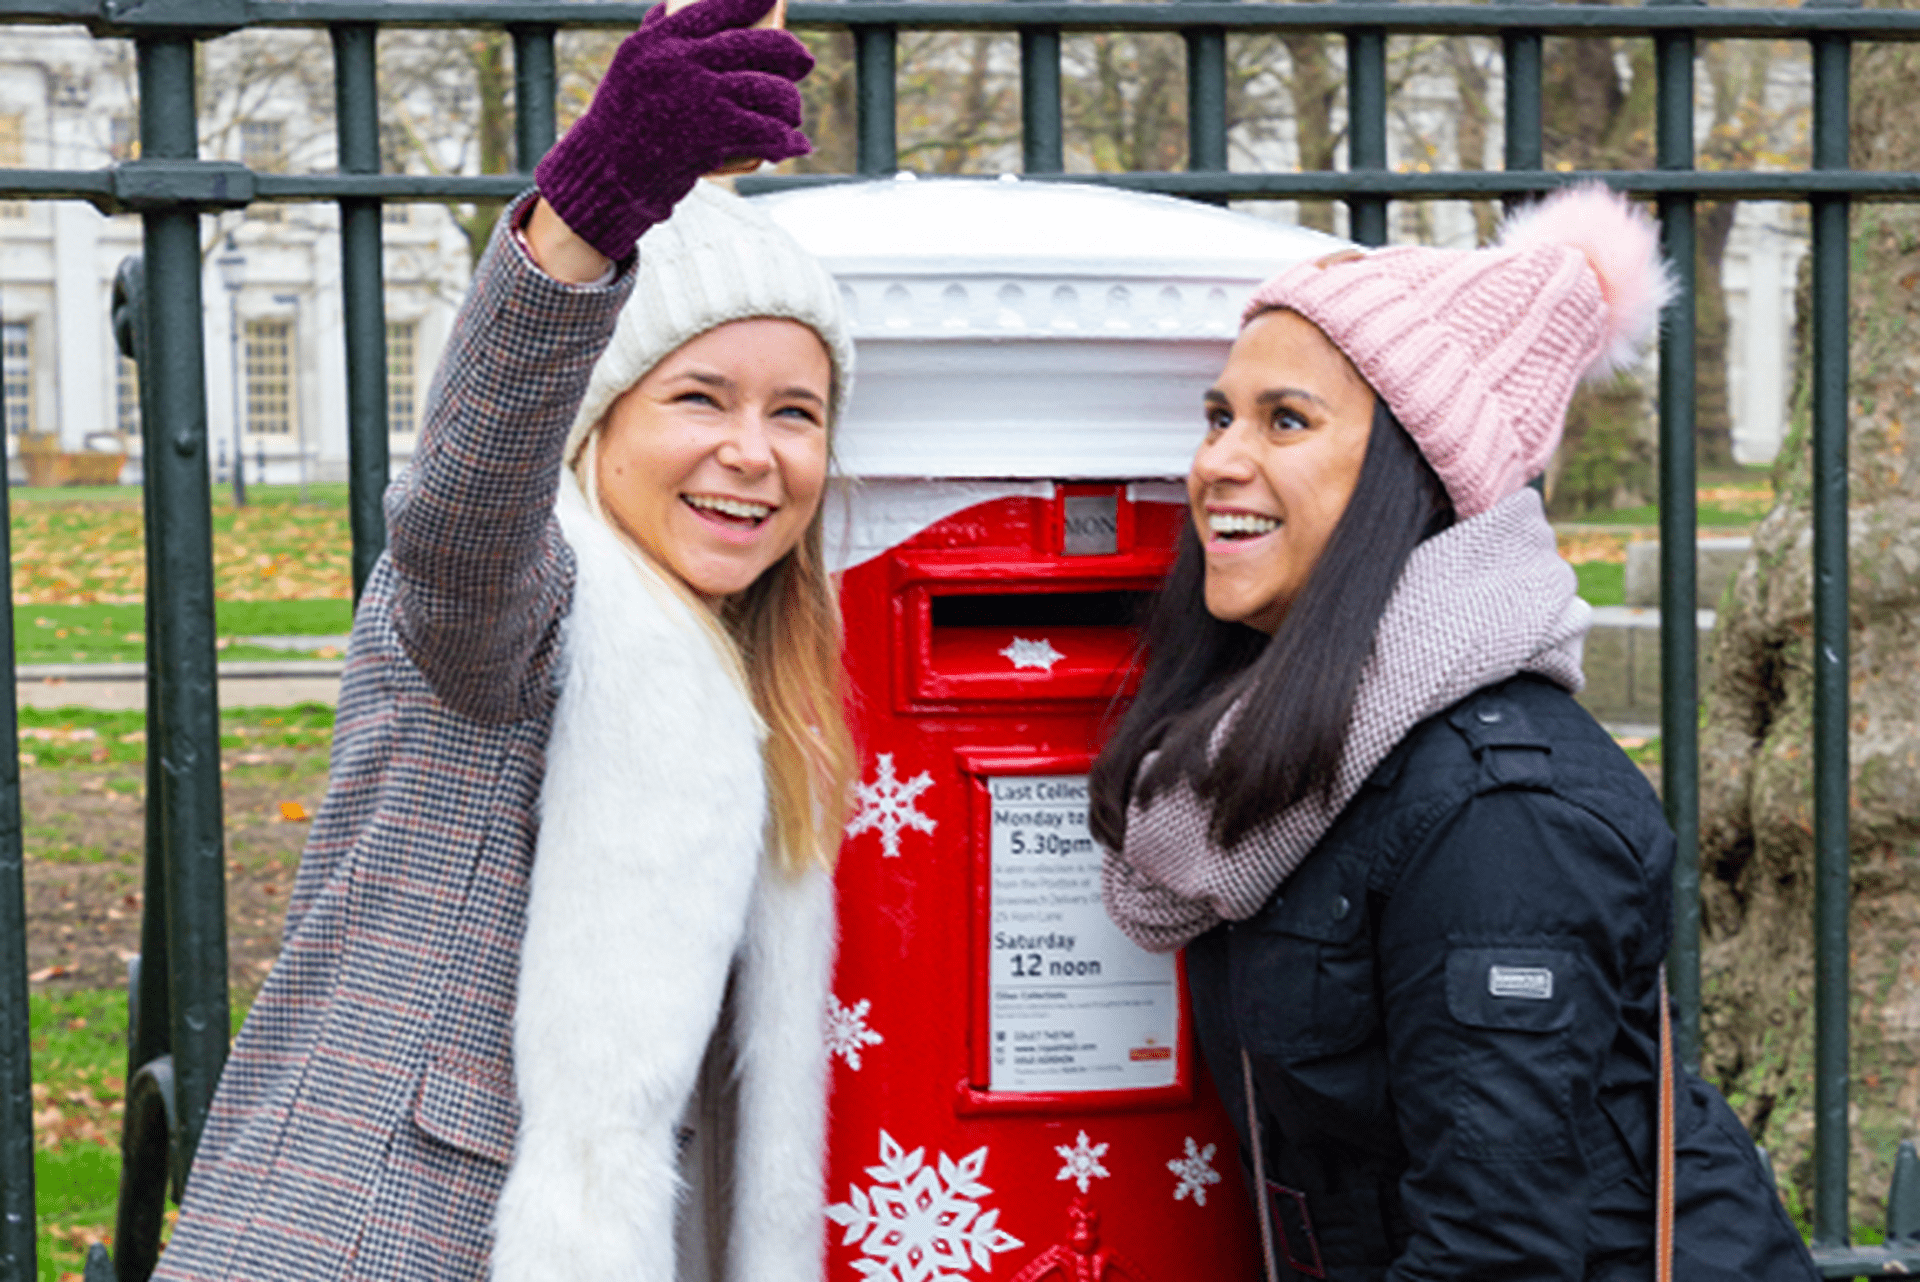 Royal Mail installs “singing” postbox in London